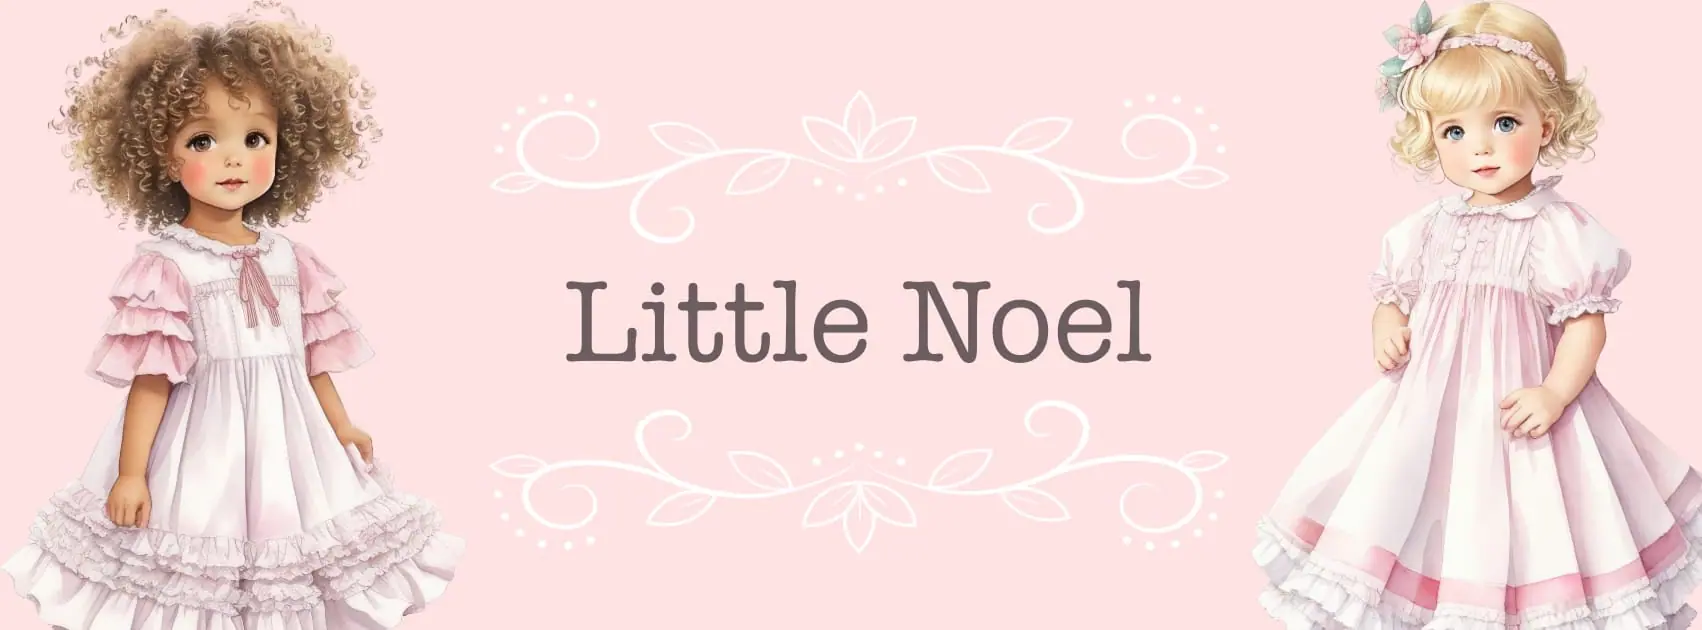 Little Noel